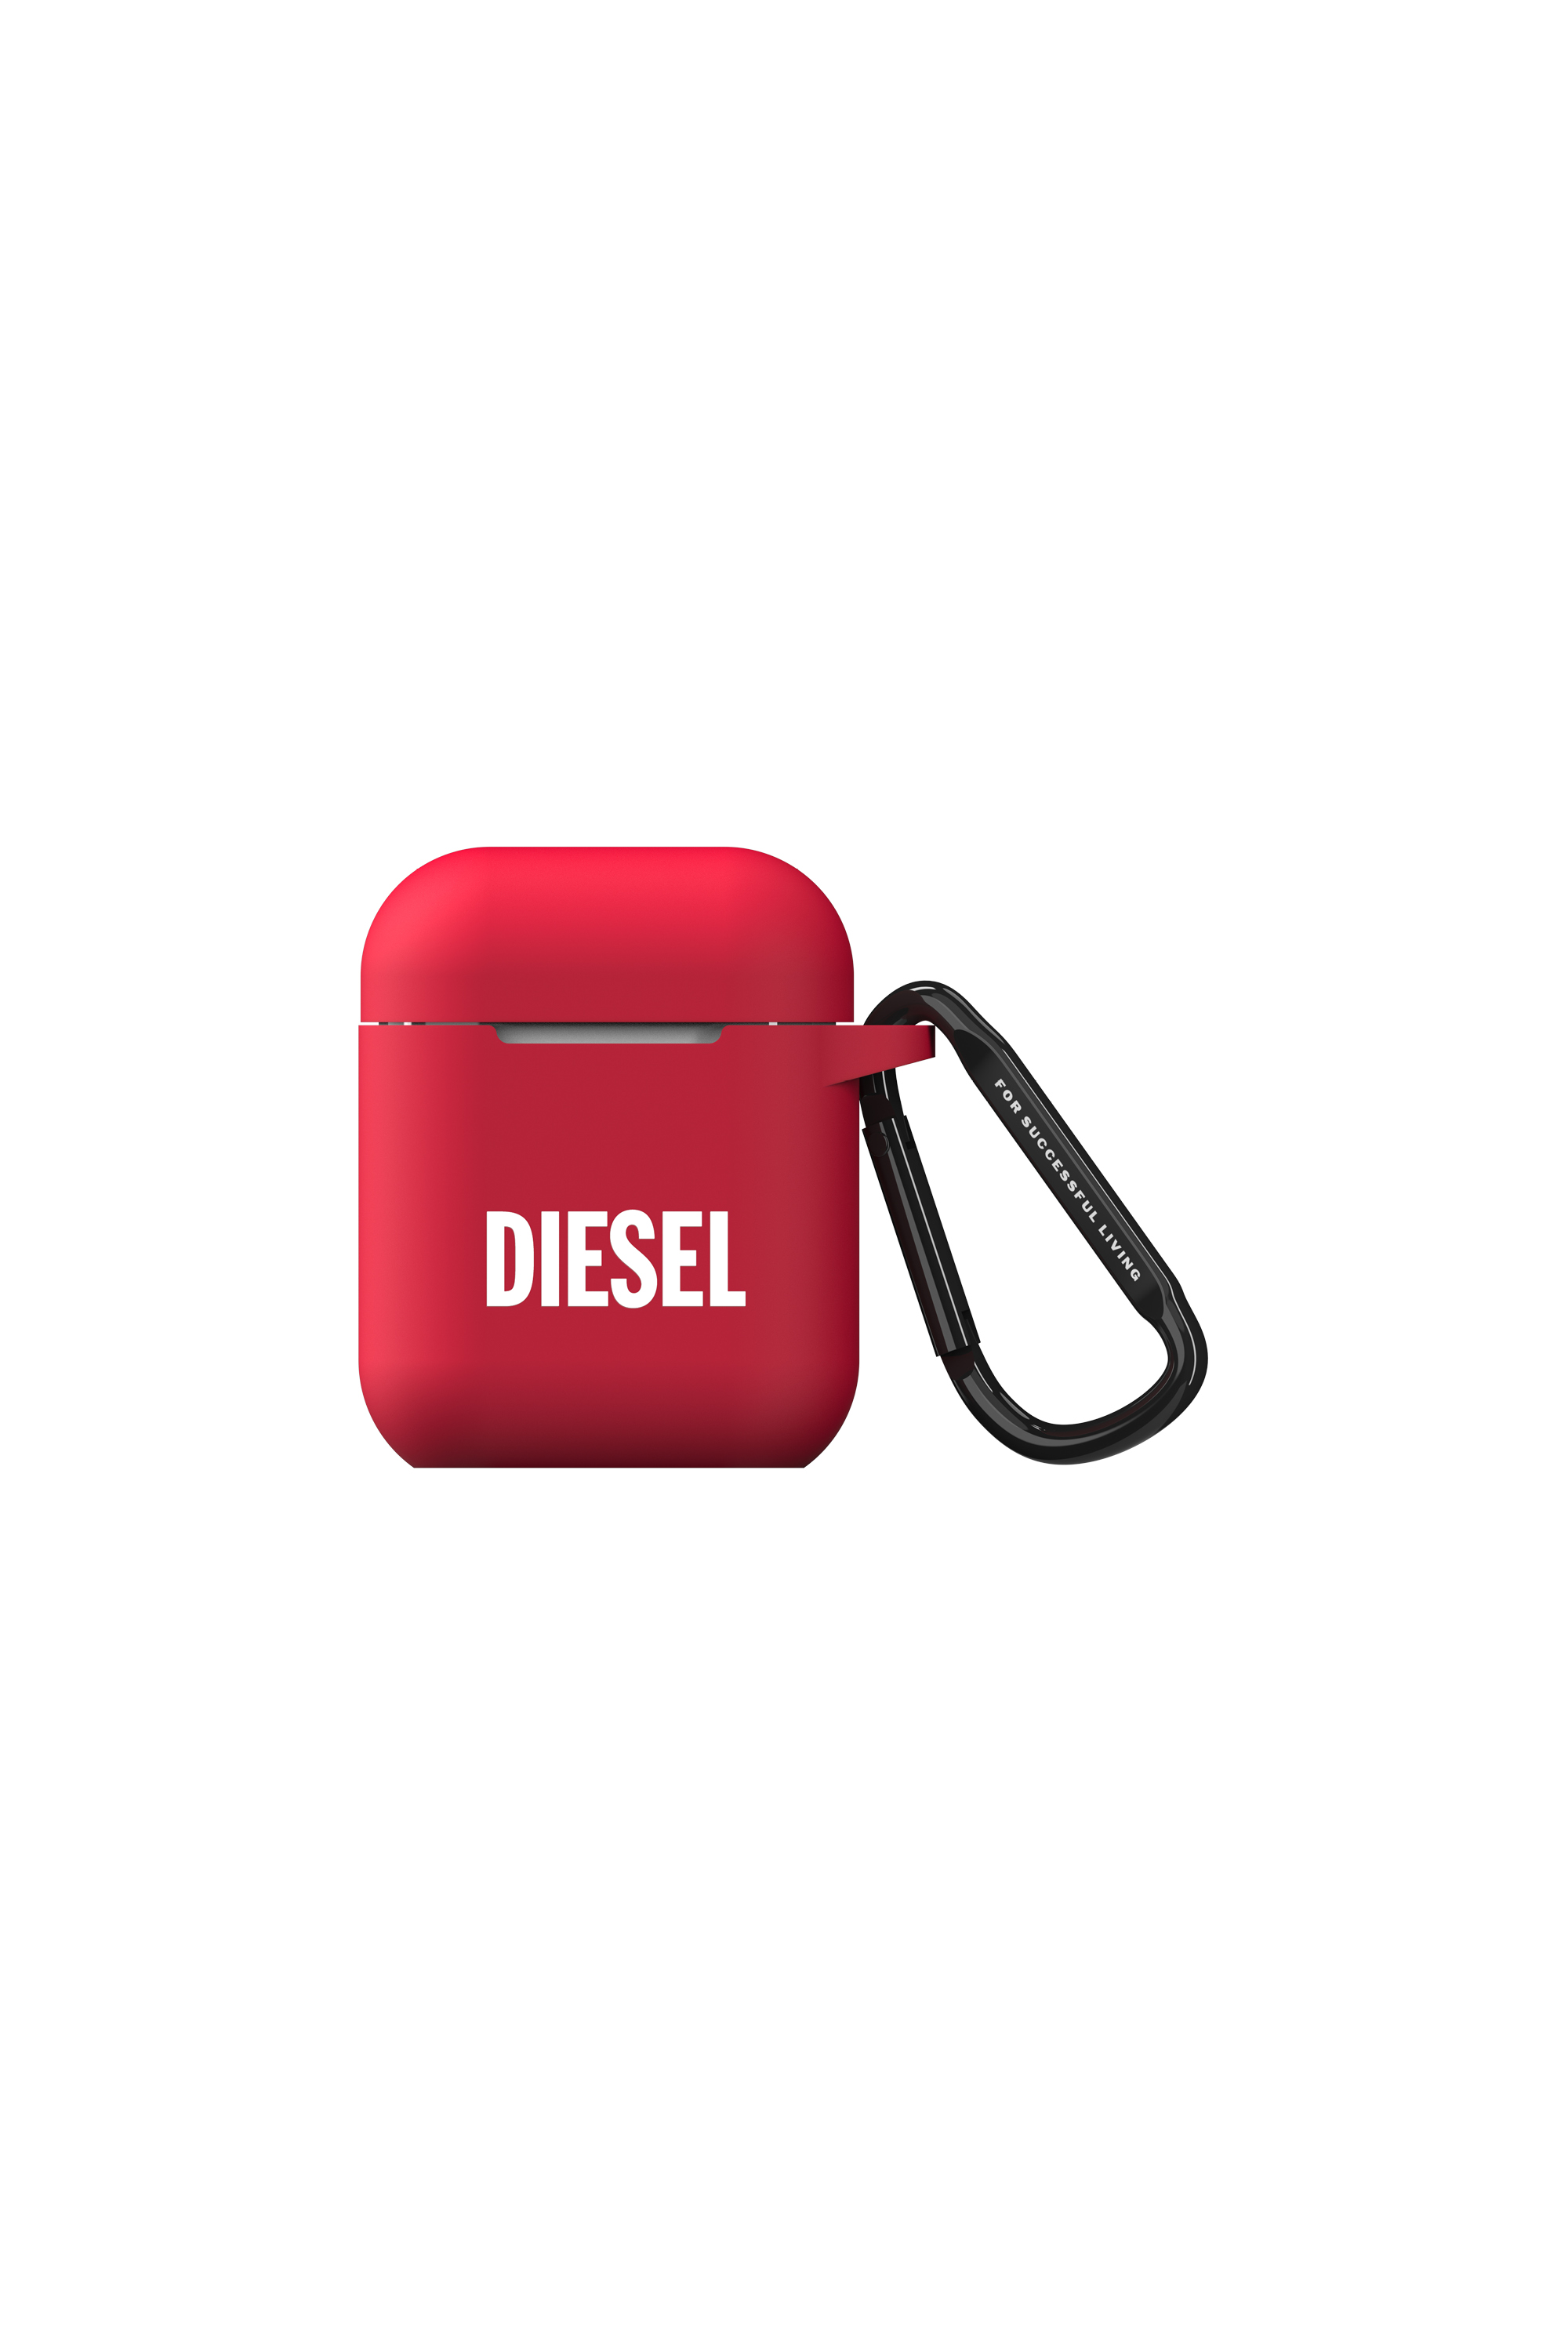 Diesel - 45832 AIRPOD CASE, Red - Image 1